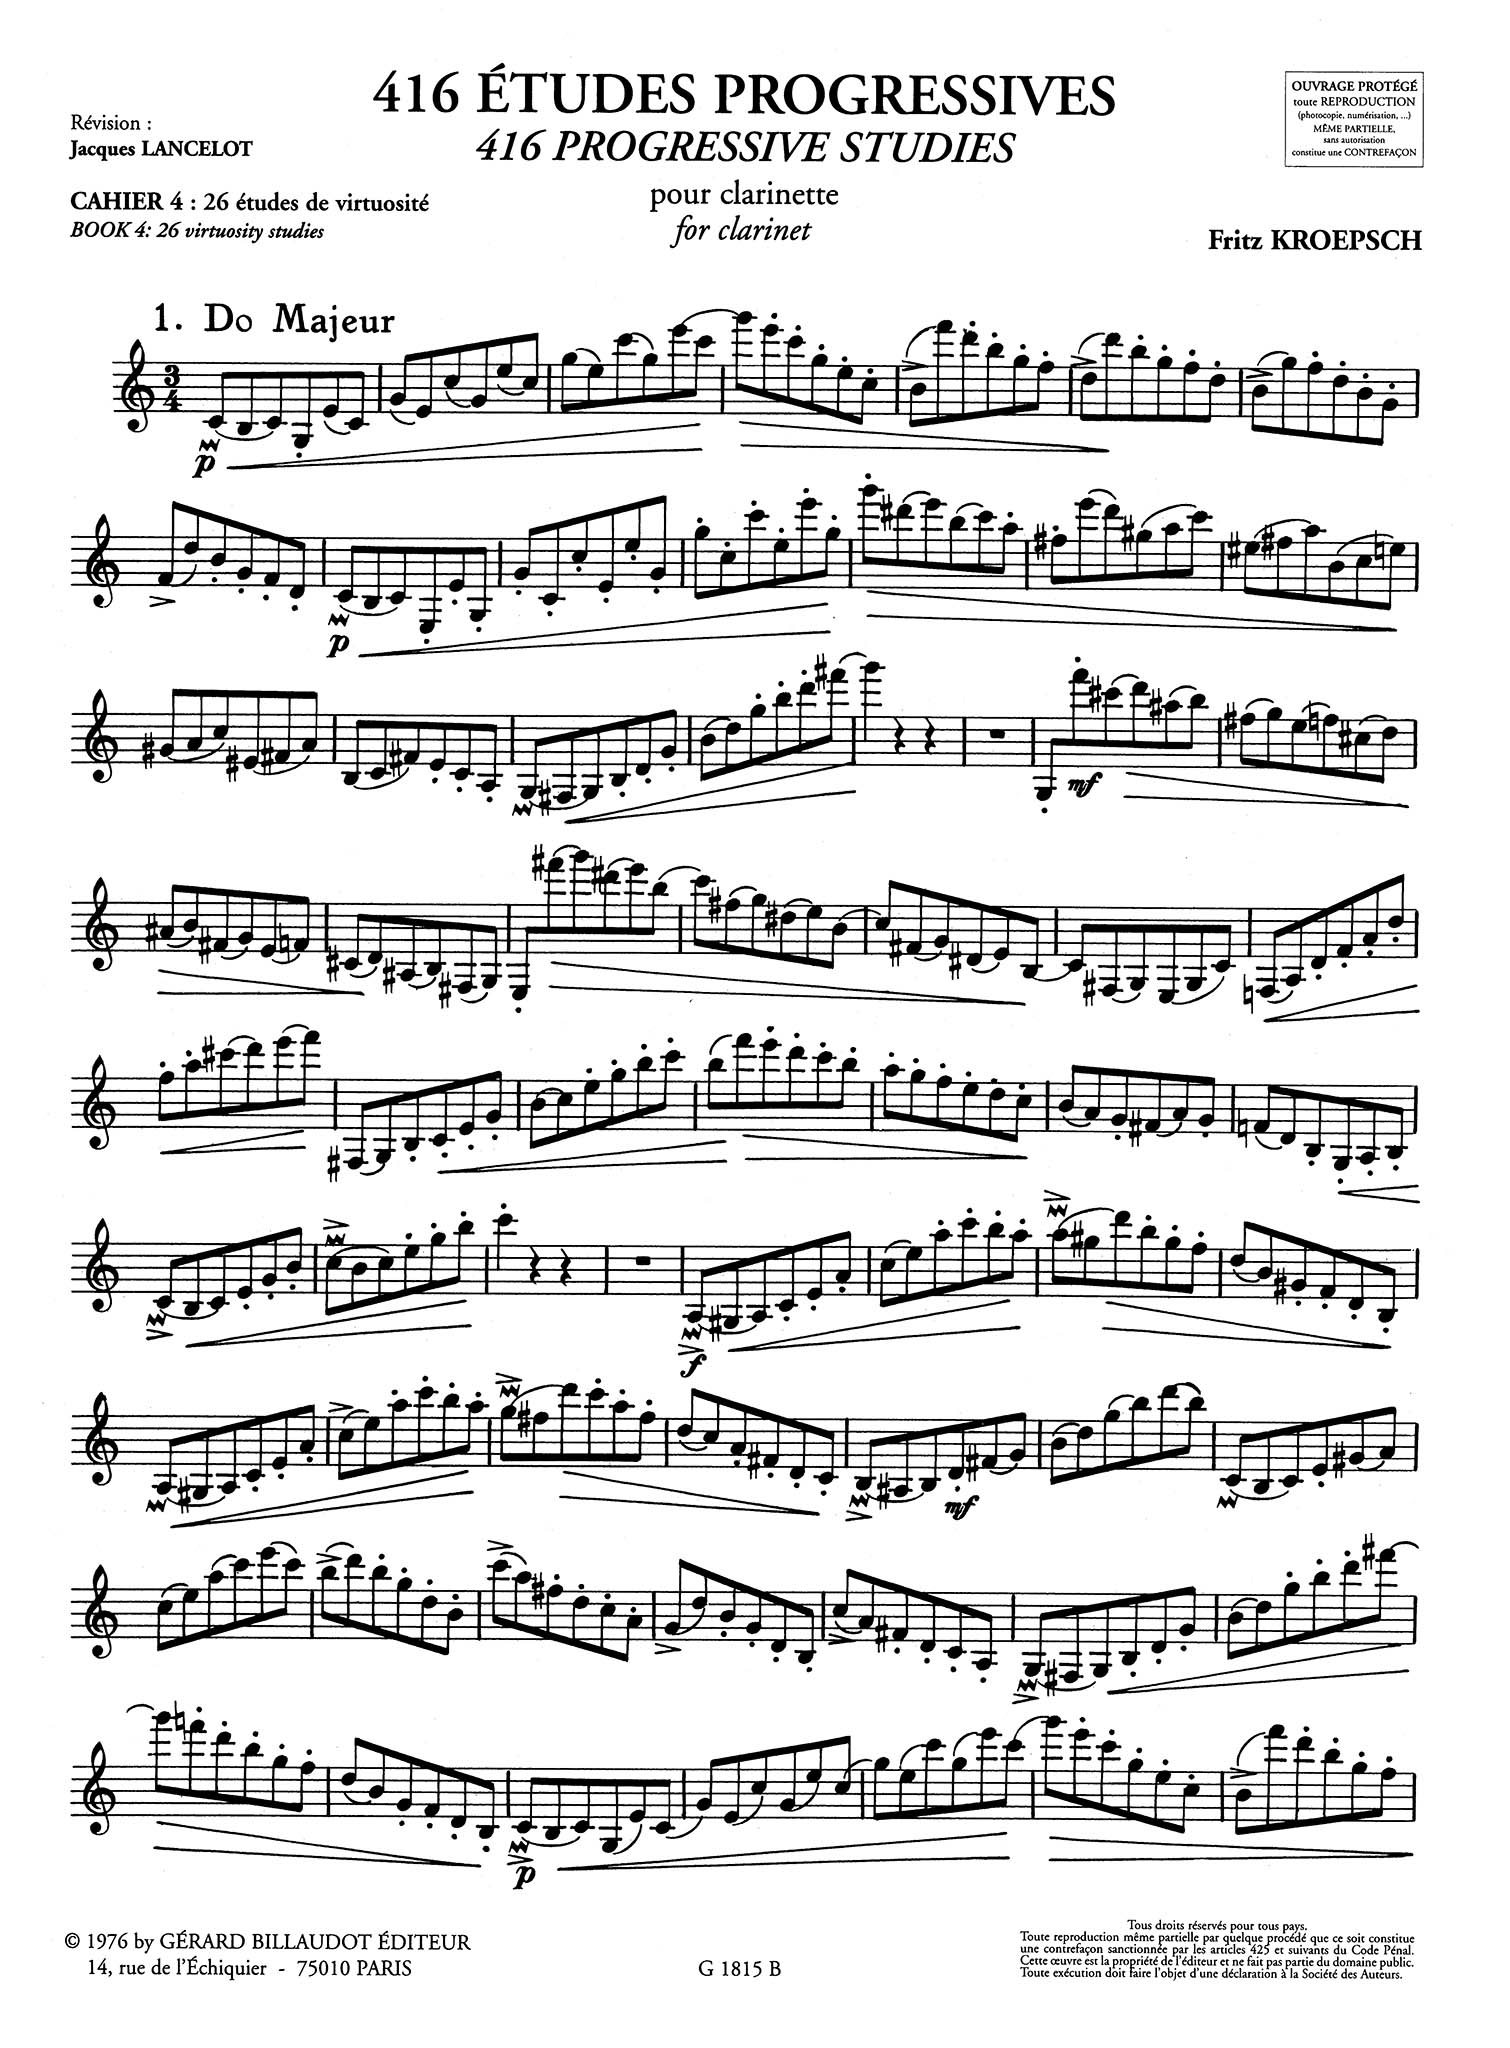 416 Progressive Studies for Clarinet, Book 4: 26 Exercises Page 3